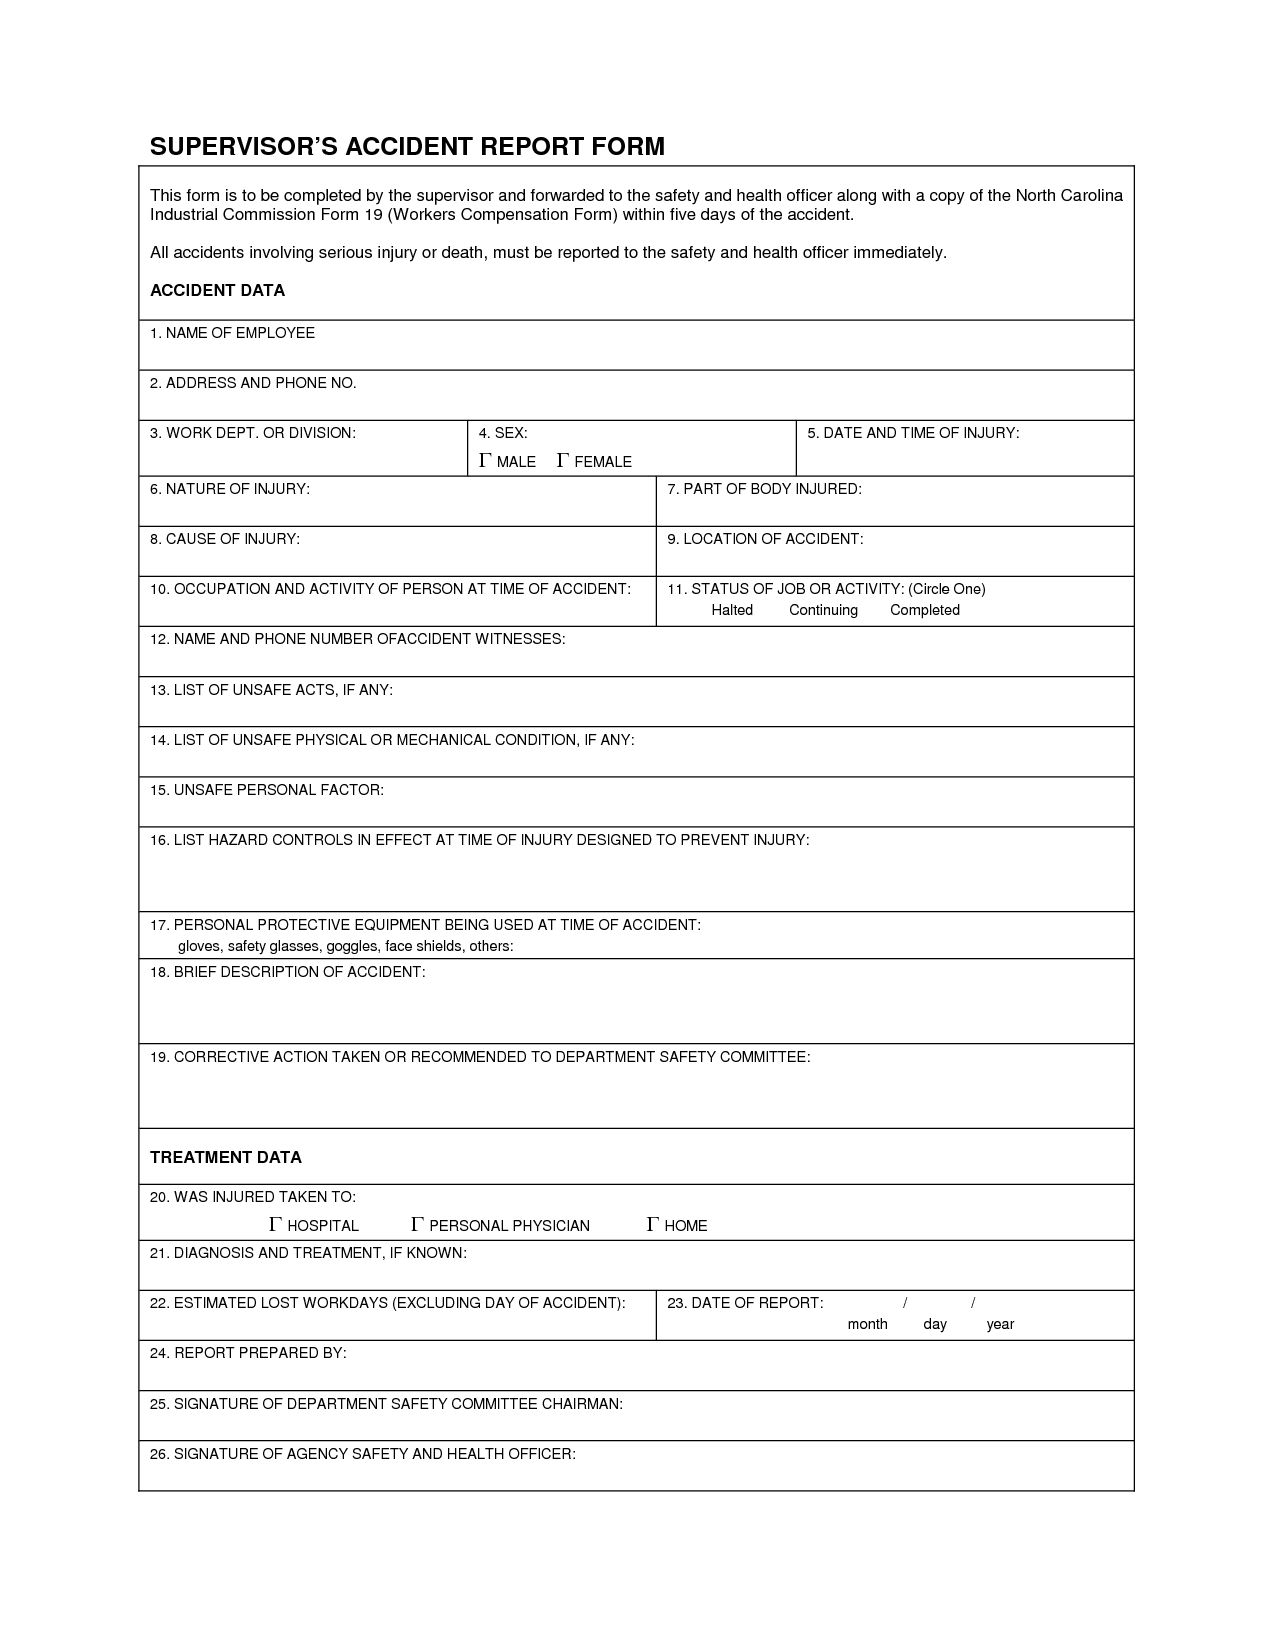 Industrial Accident Report Form Template  Supervisor's Accident regarding Incident Hazard Report Form Template